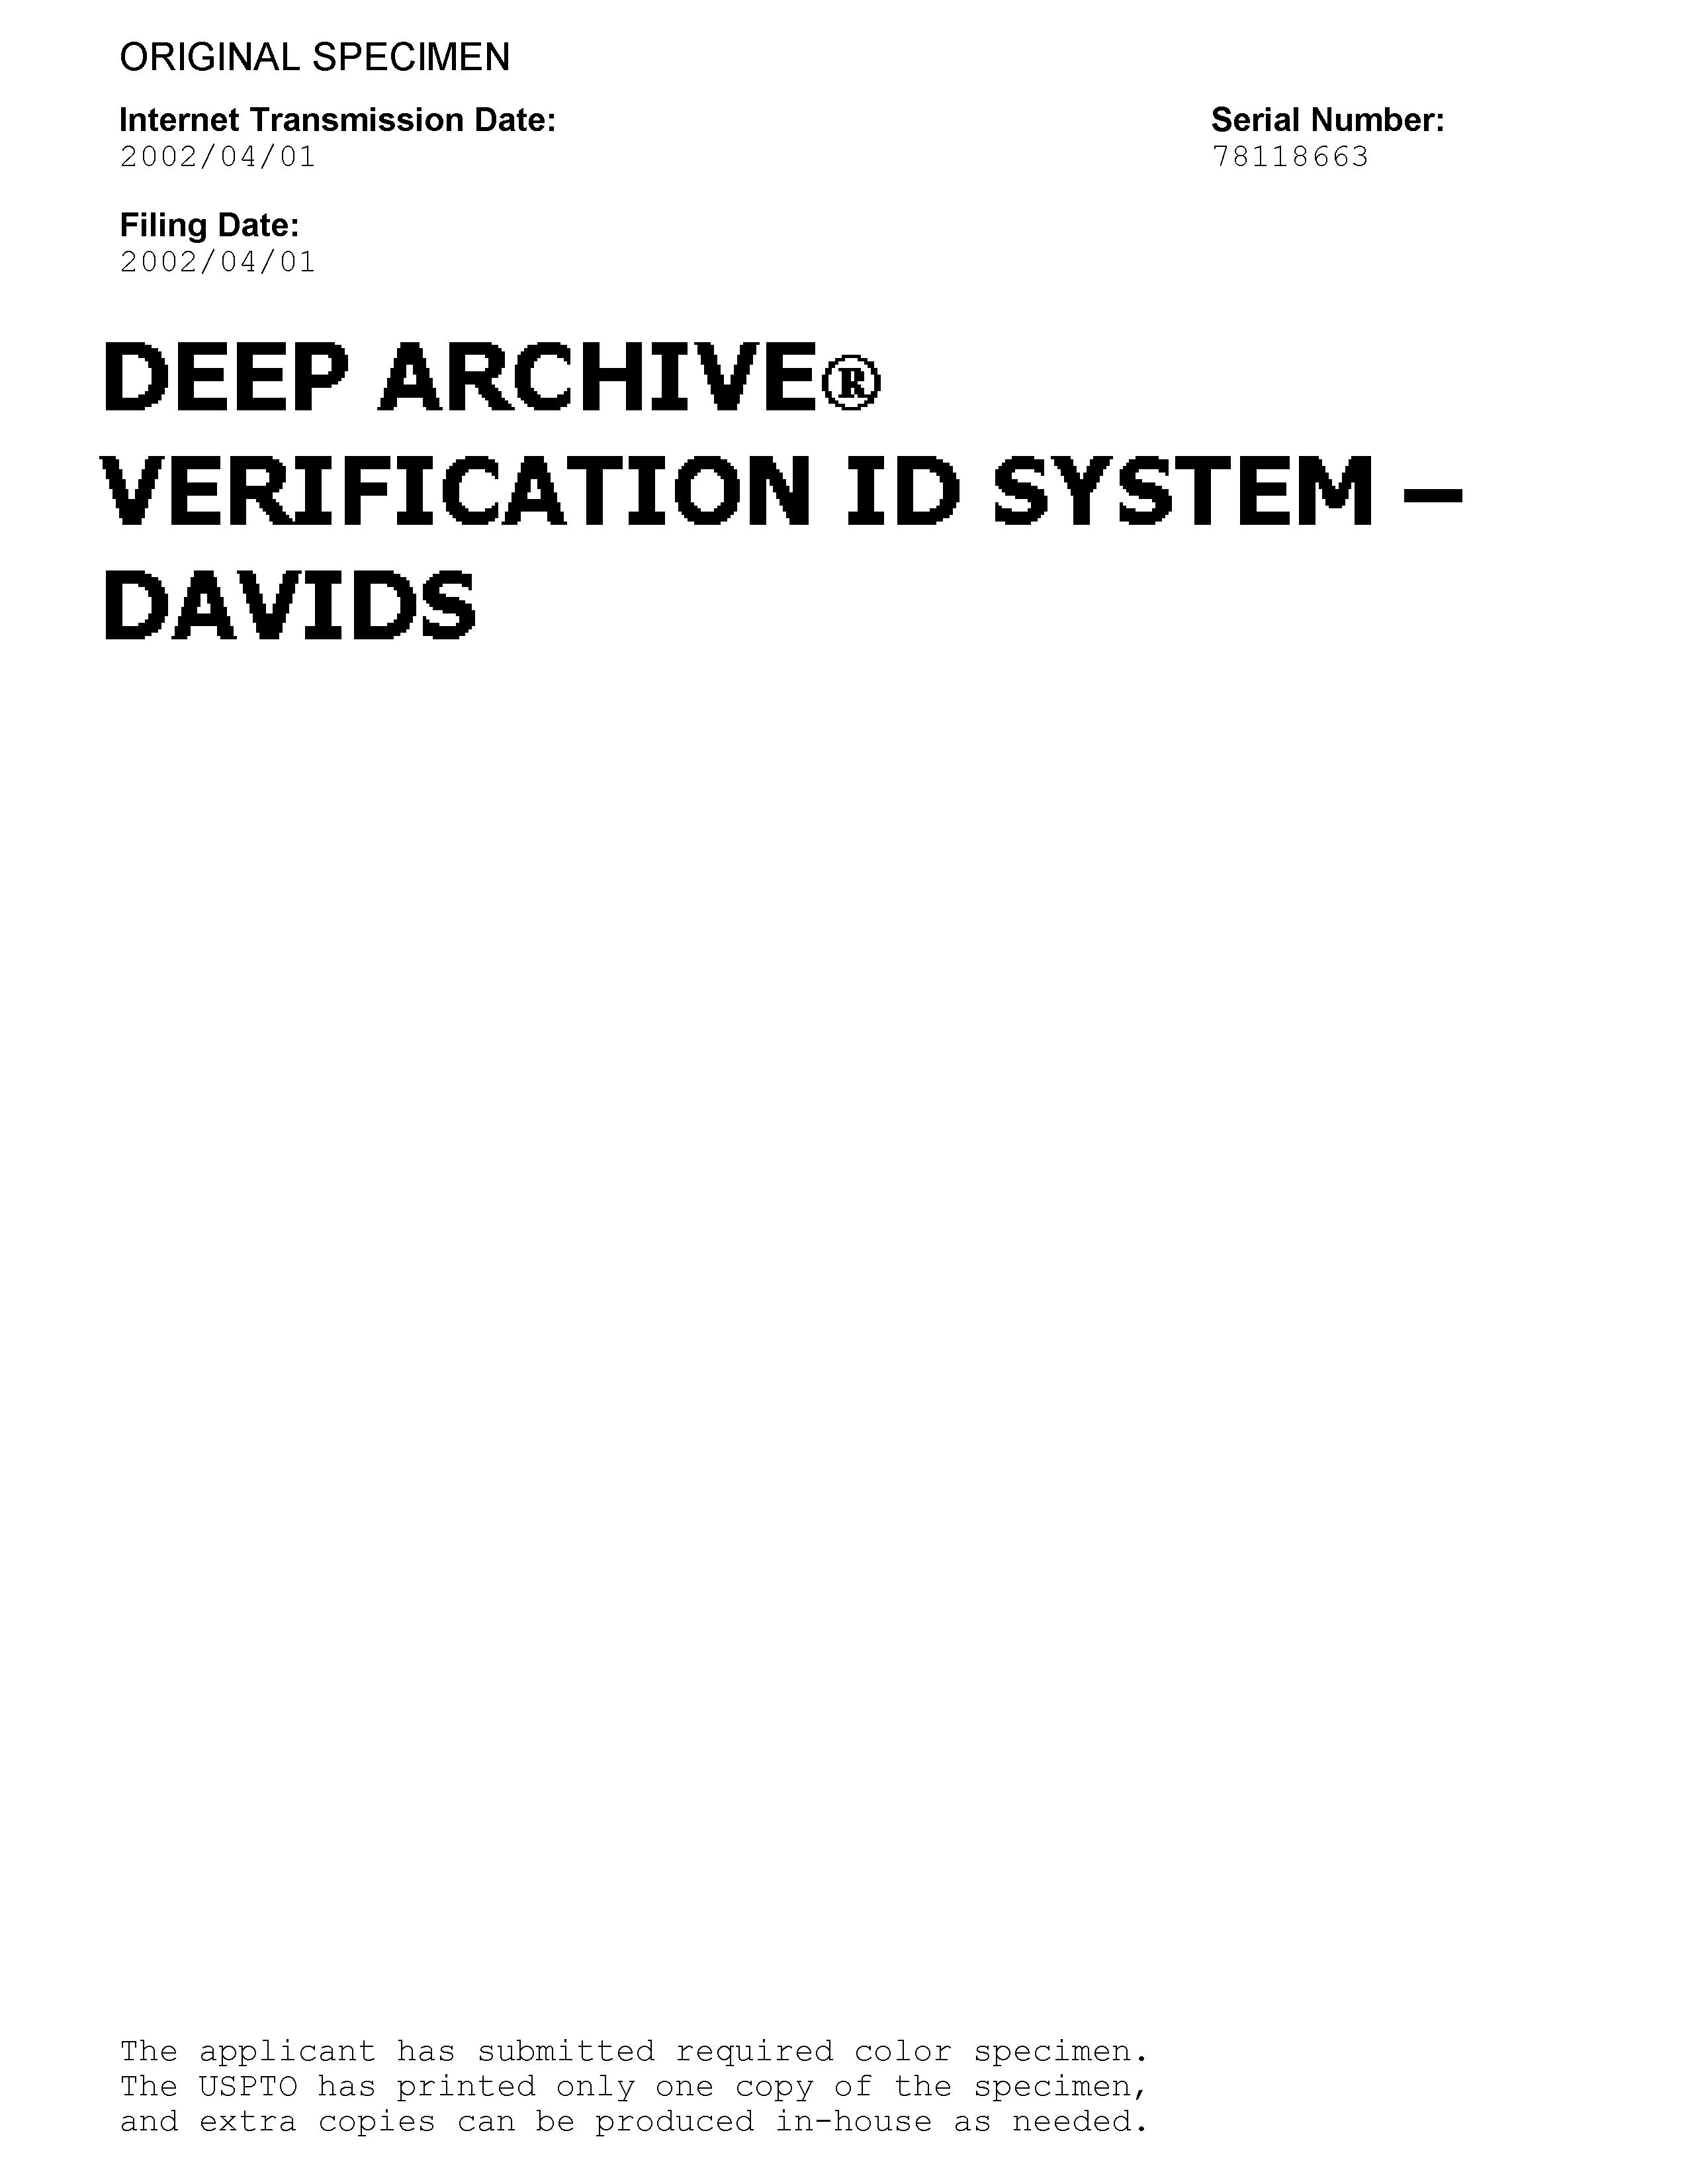  DEEP ARCHIVE VERIFICATION ID SYSTEM DAVIDS